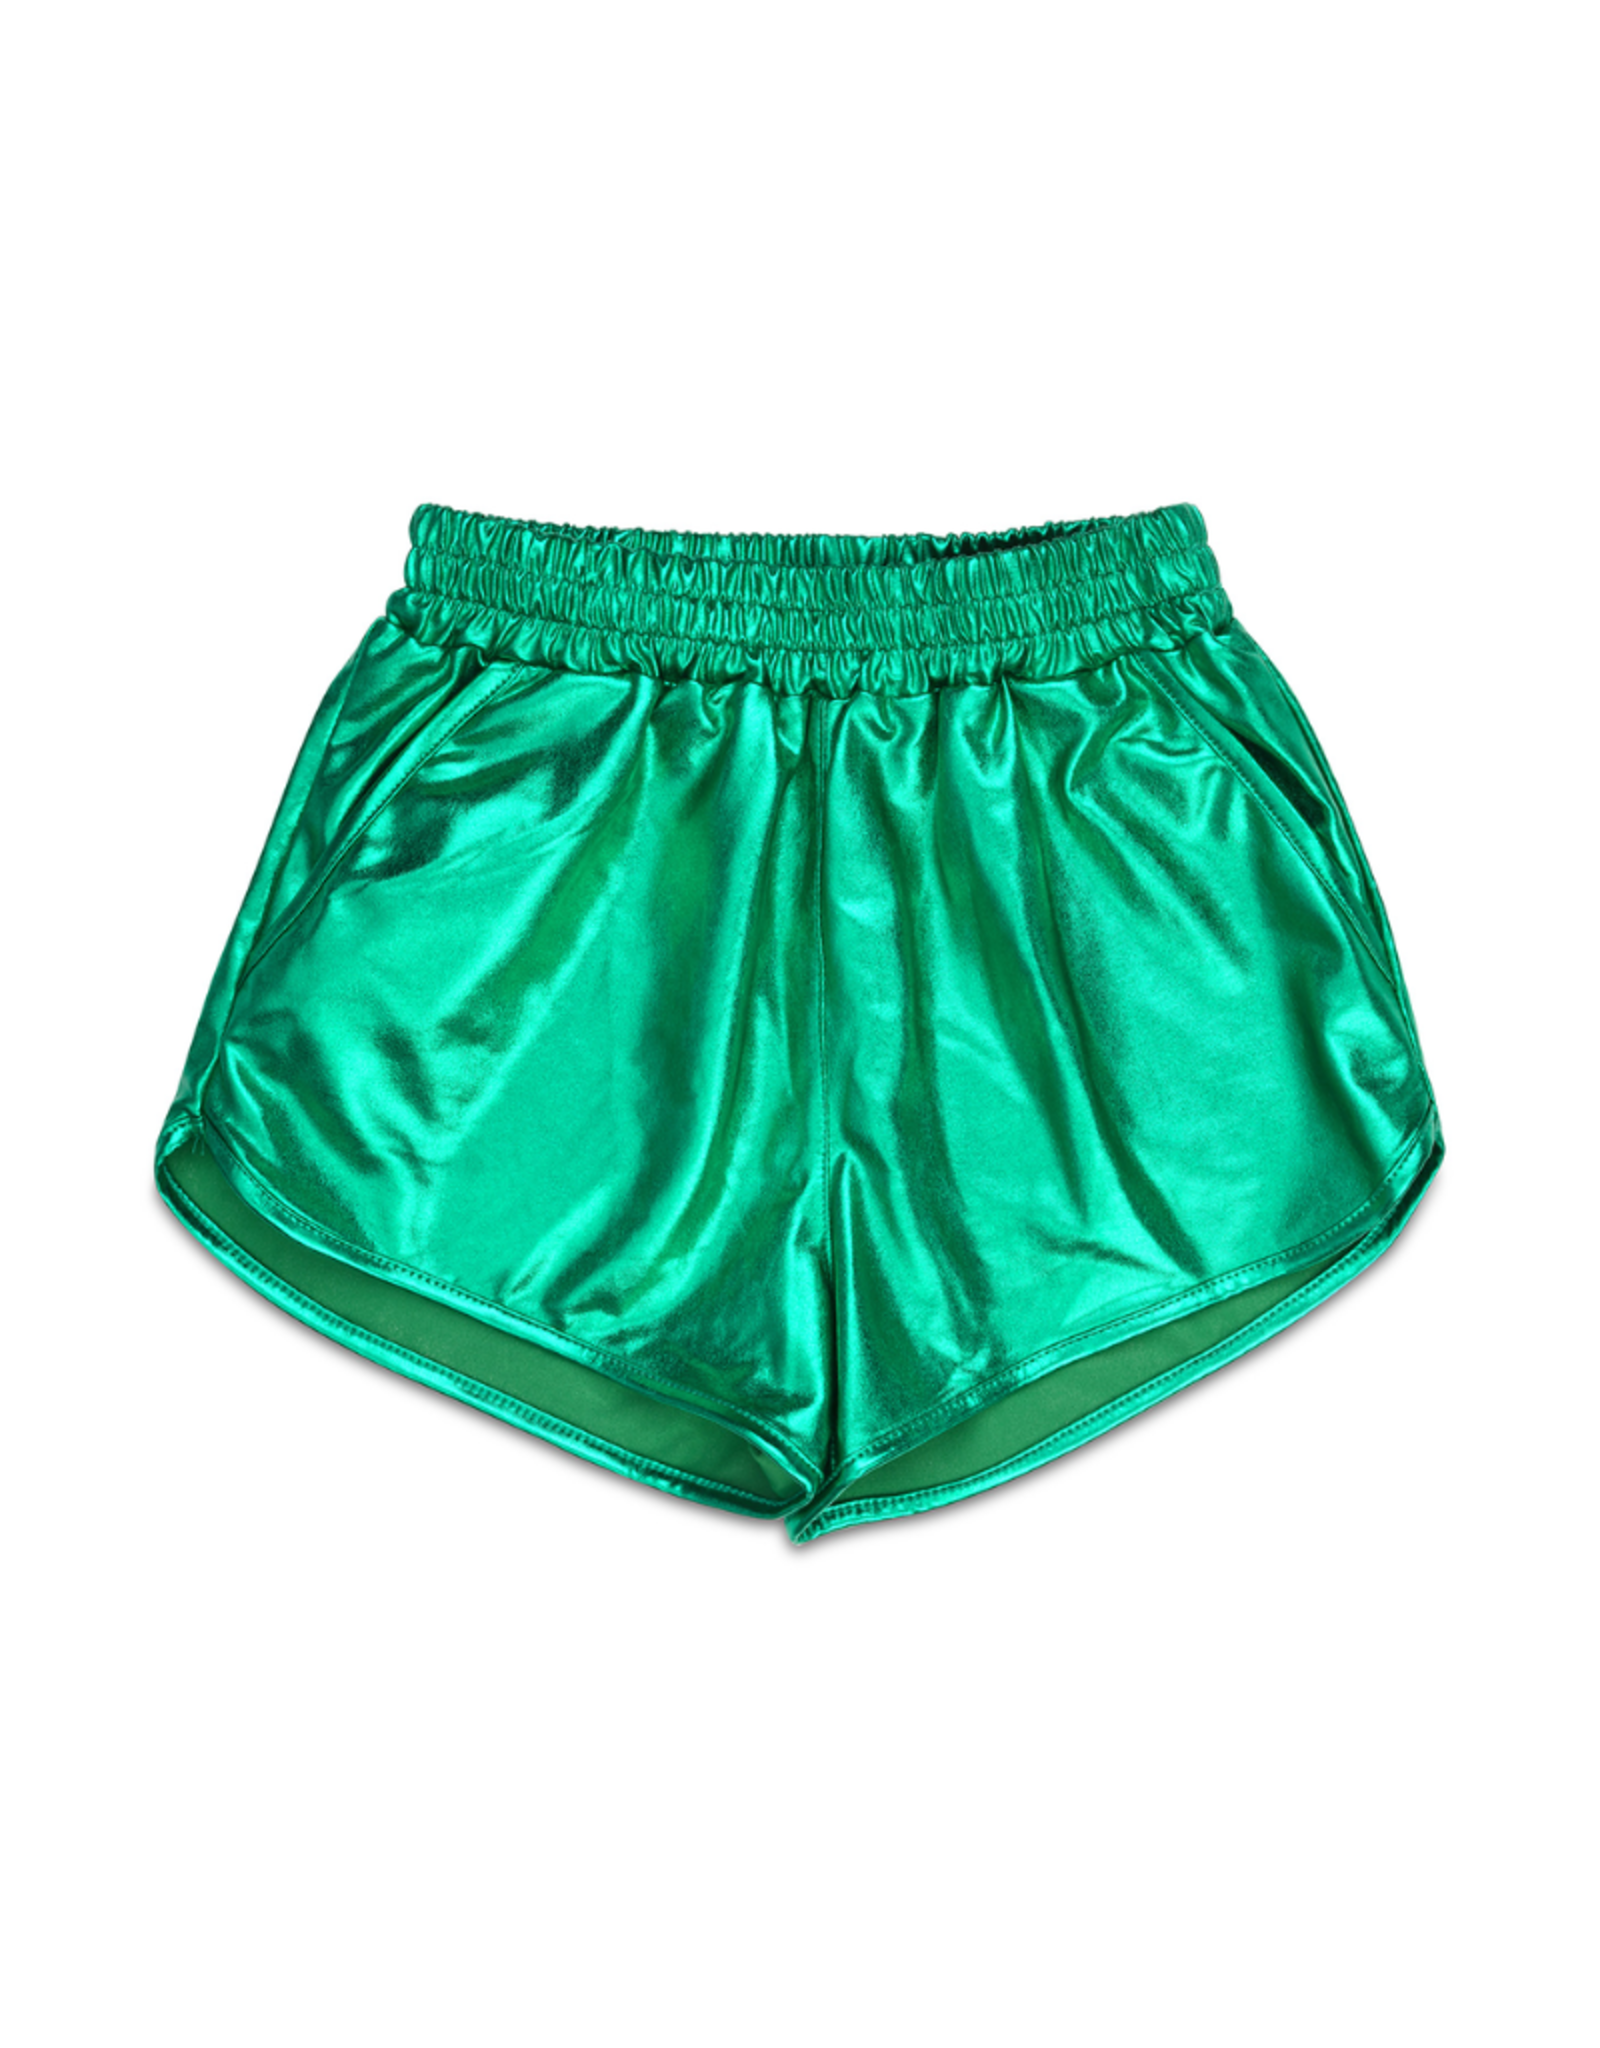 Iscream Green Metallic Shorts